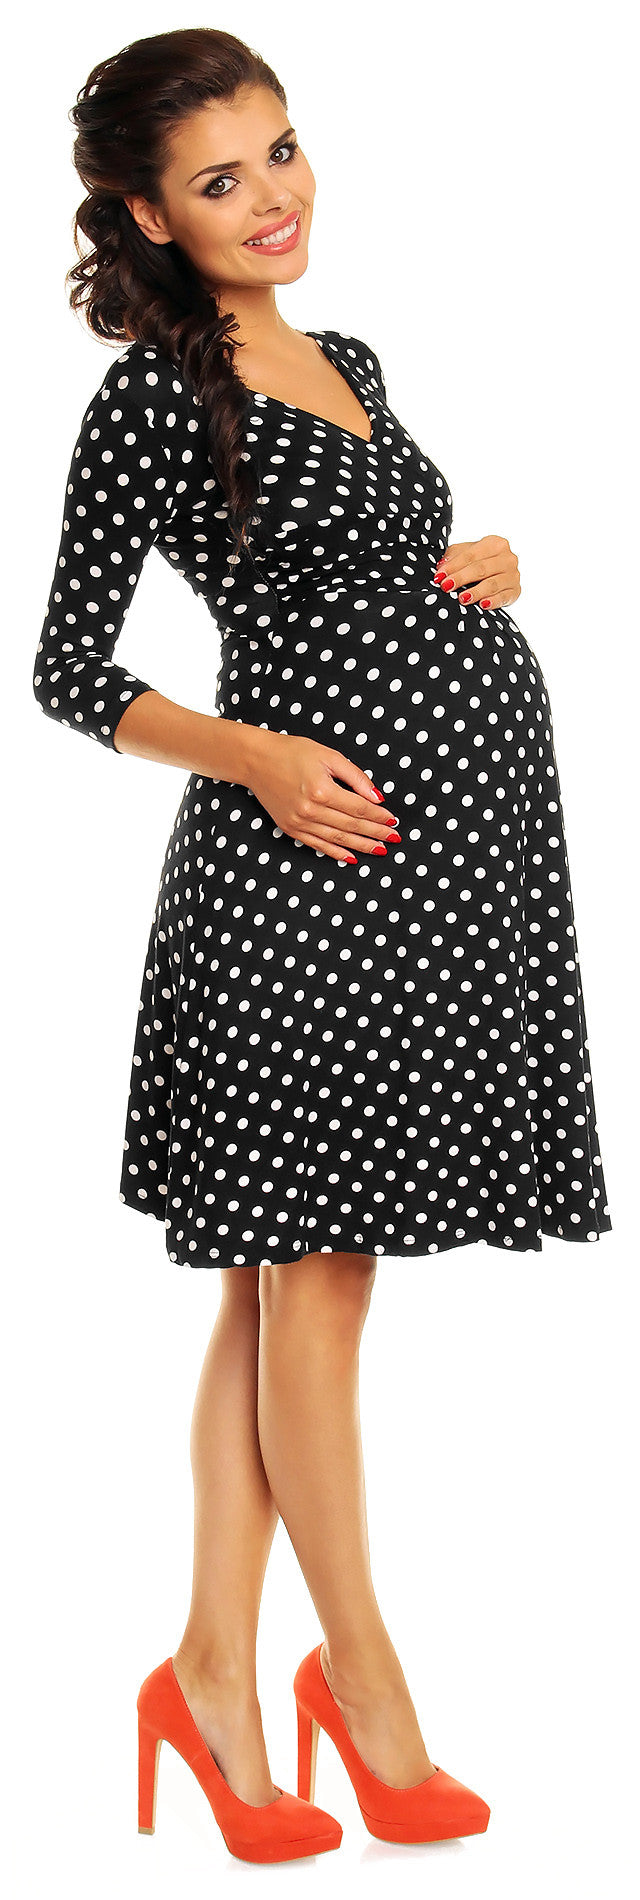 Polkadot Maternity Dress with flared skirt